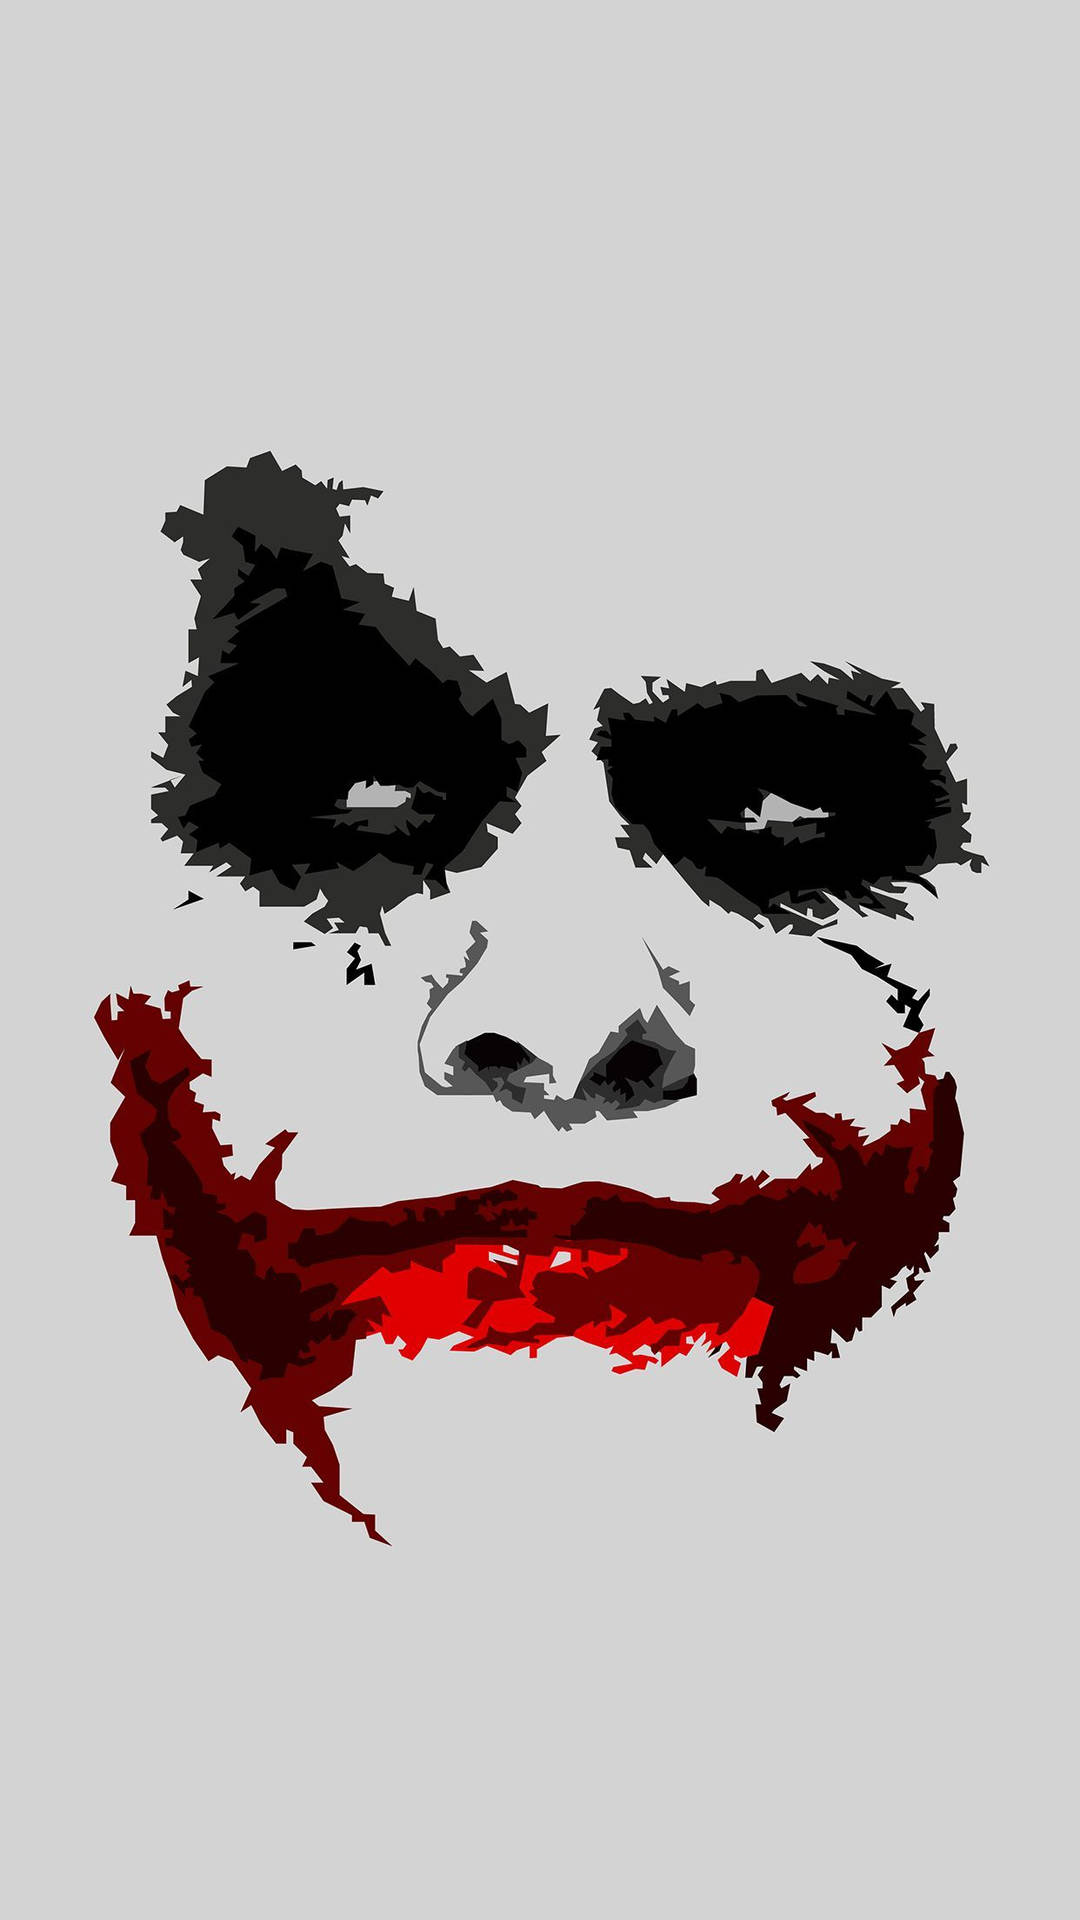 Joker's Face Paint